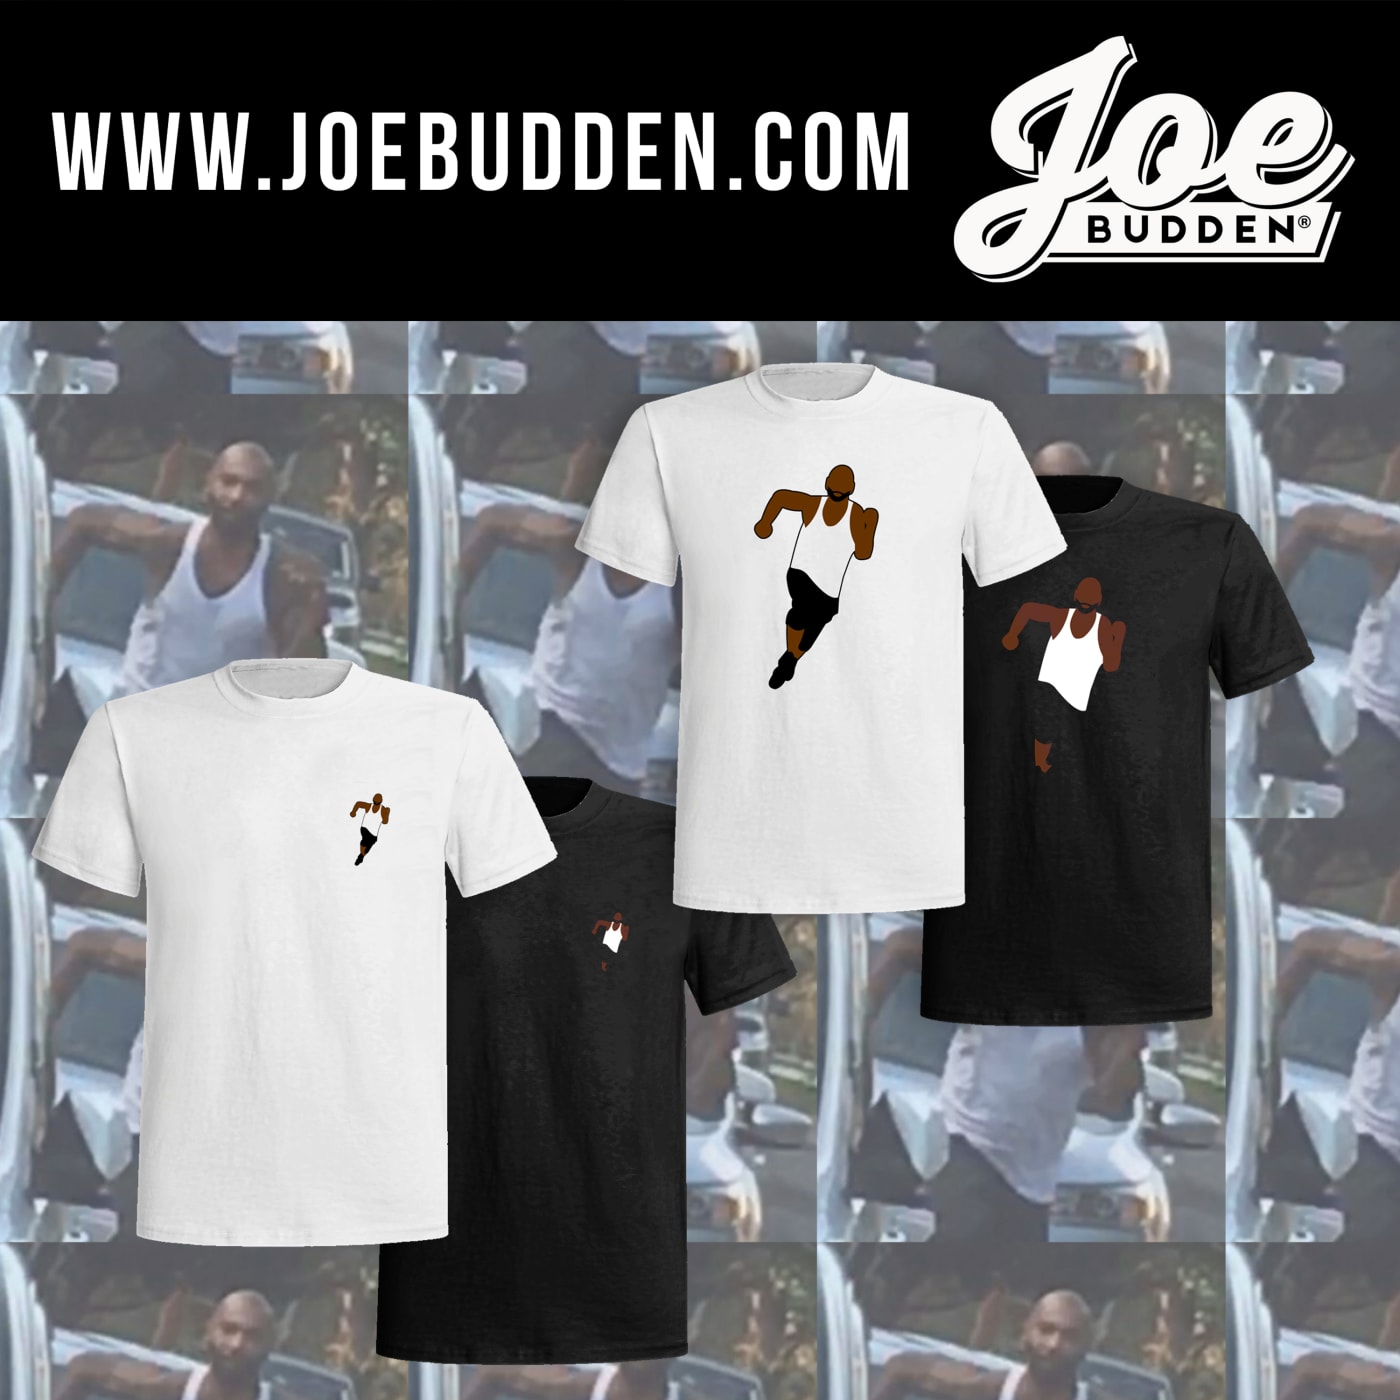 Joe Budden Drake Feud Merch, Shirts